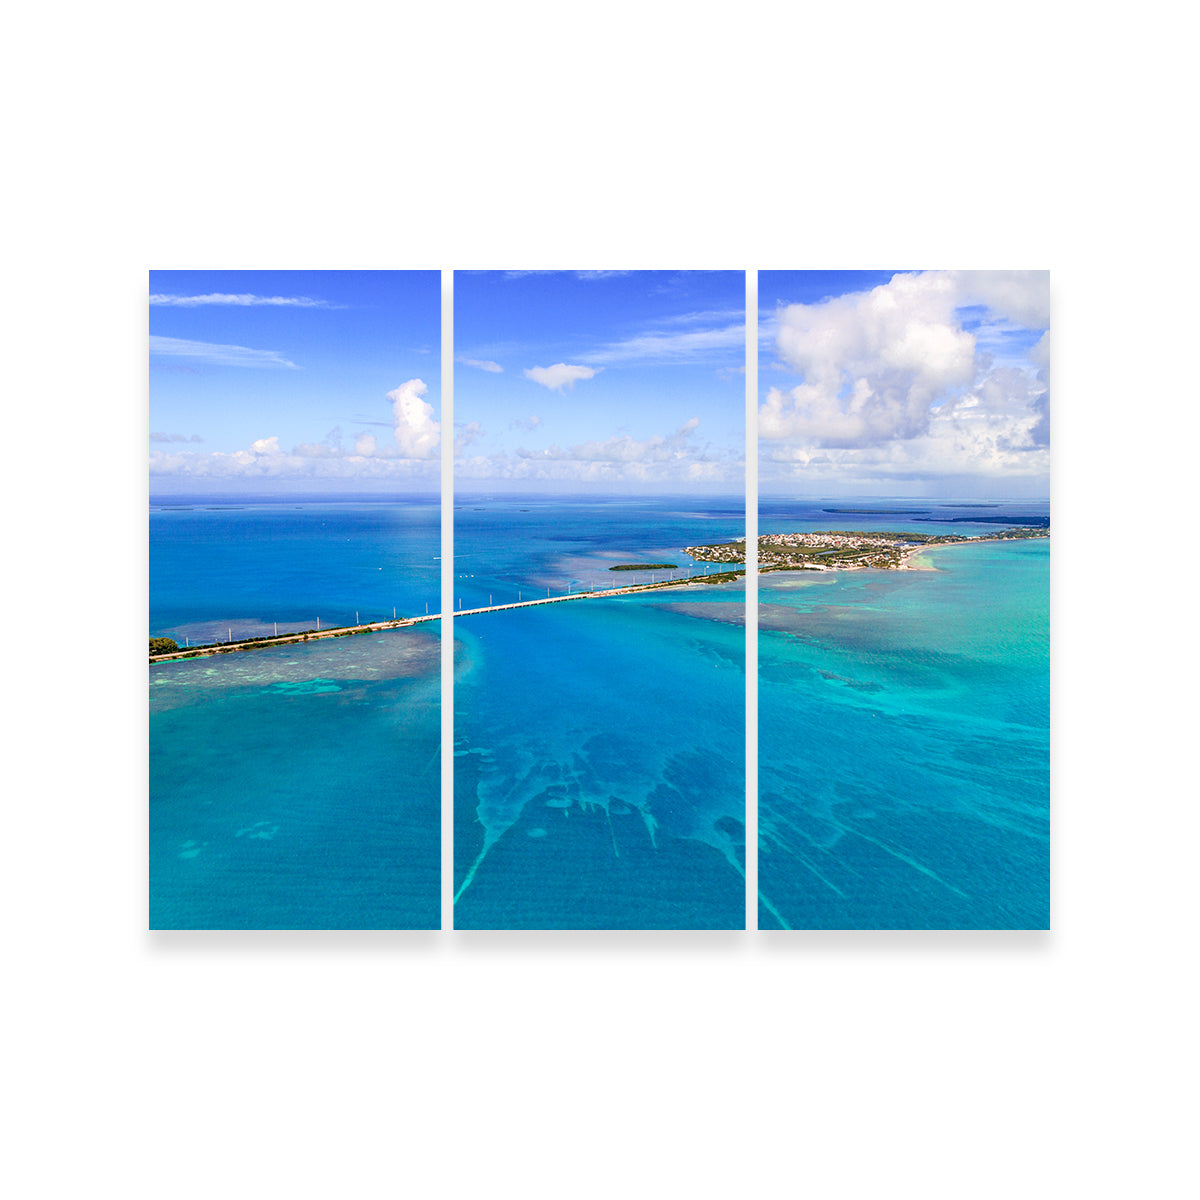 Florida Keys Aerial View with Bridge